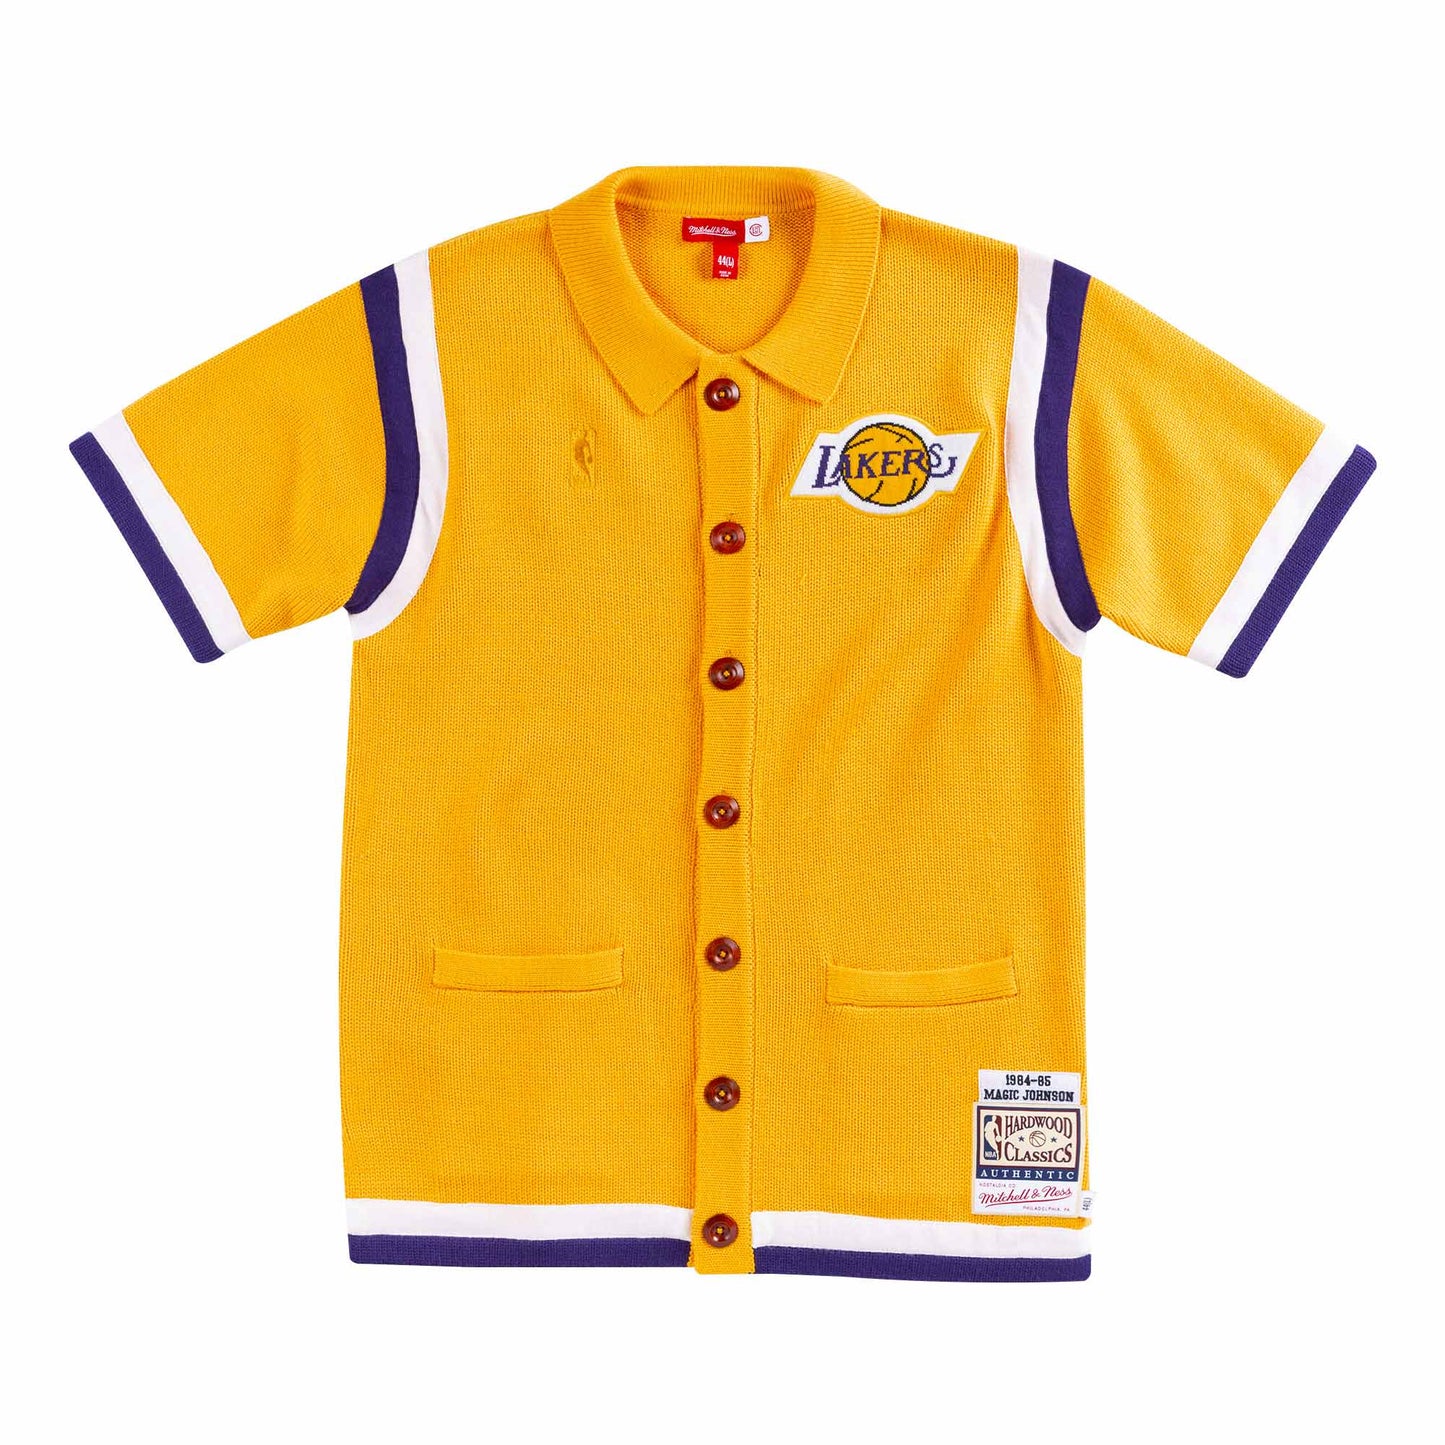 CLOT x NBA Sweater Knit Shooting Shirt Los Angeles Lakers 1984-85 Magic Johnson